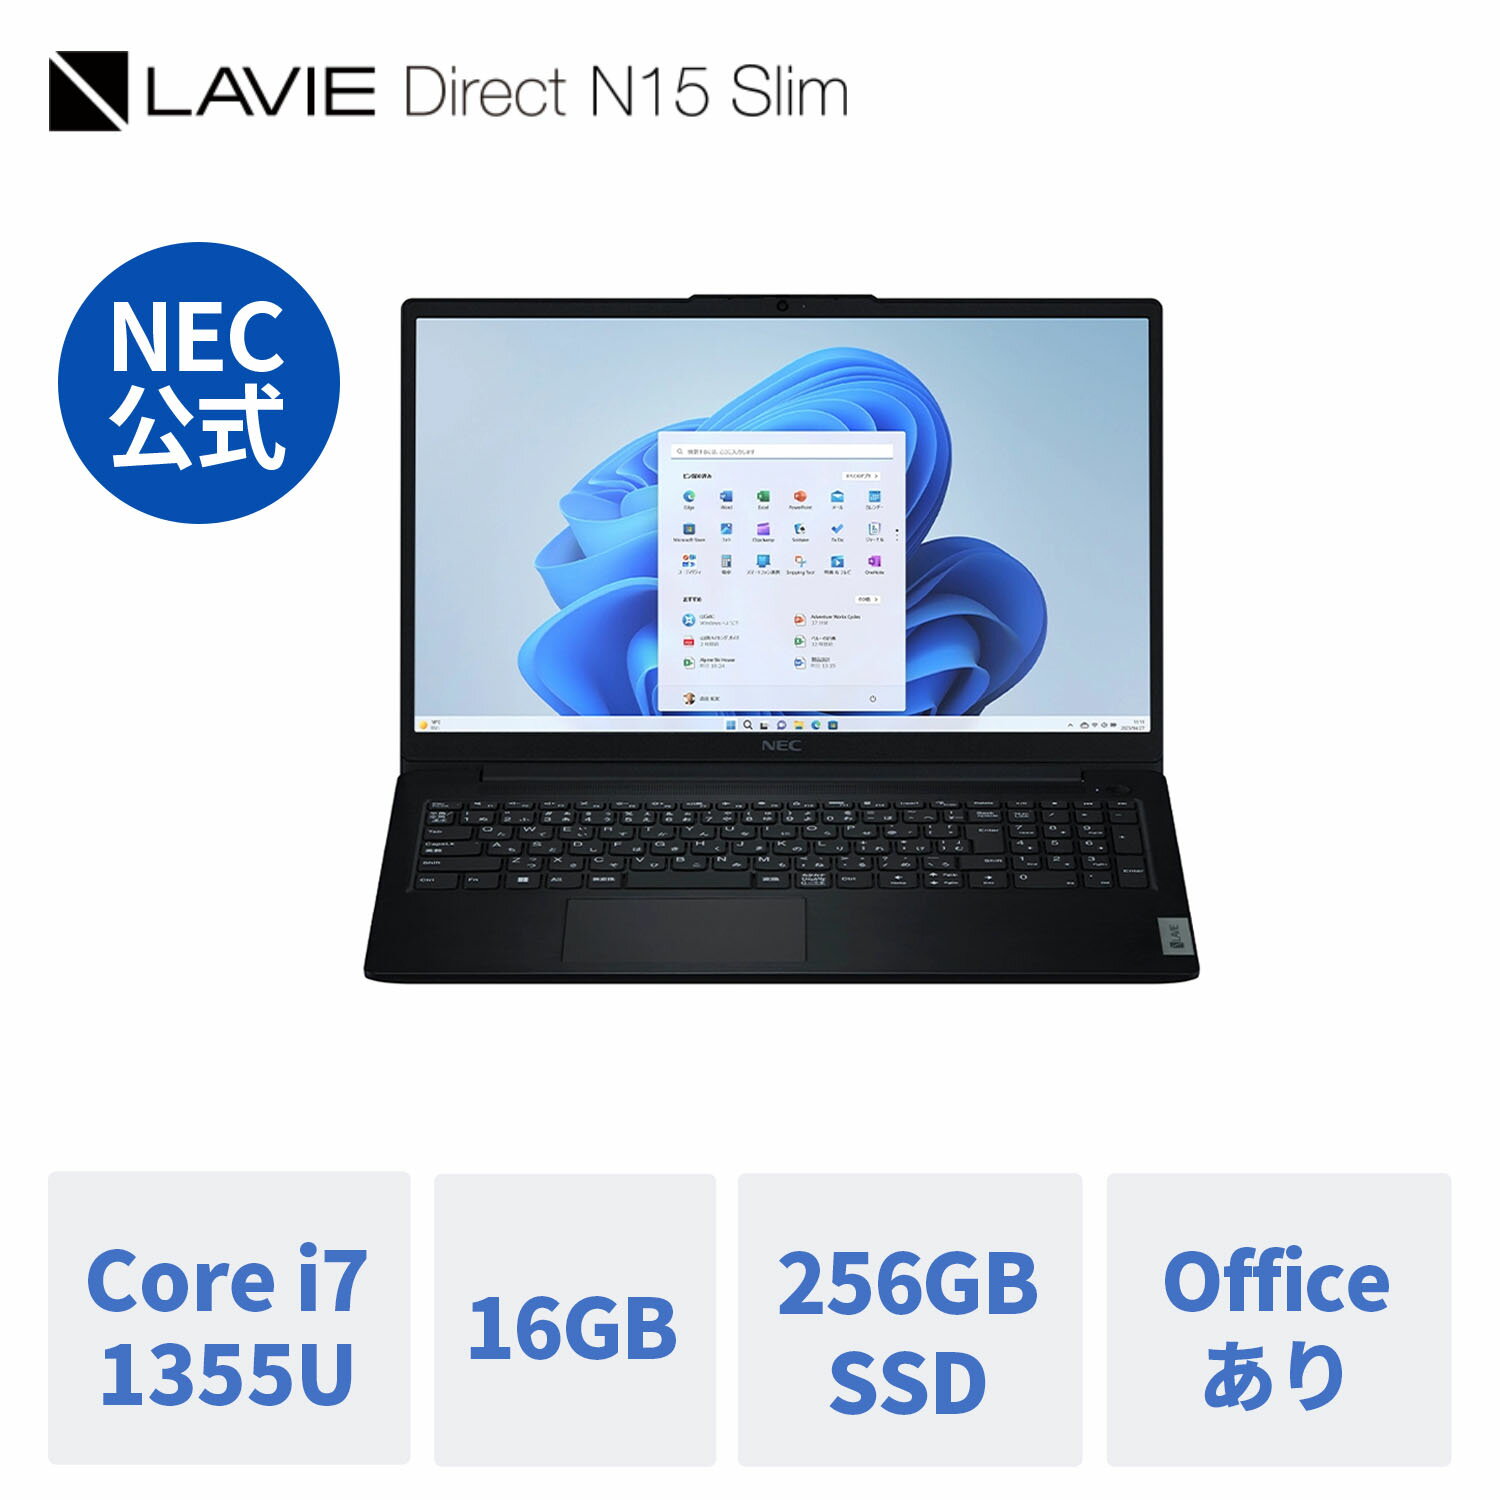 【Norton1】【DEAL10 】【7,000円OFFクーポン】【公式】 新品 NEC ノートパソコン office付き LAVIE Direct N15 Slim 15.6インチ Windows 11 Home Core i7-1355U メモリ 16GB 256GB SSD 1年保証 送料無料 yxe